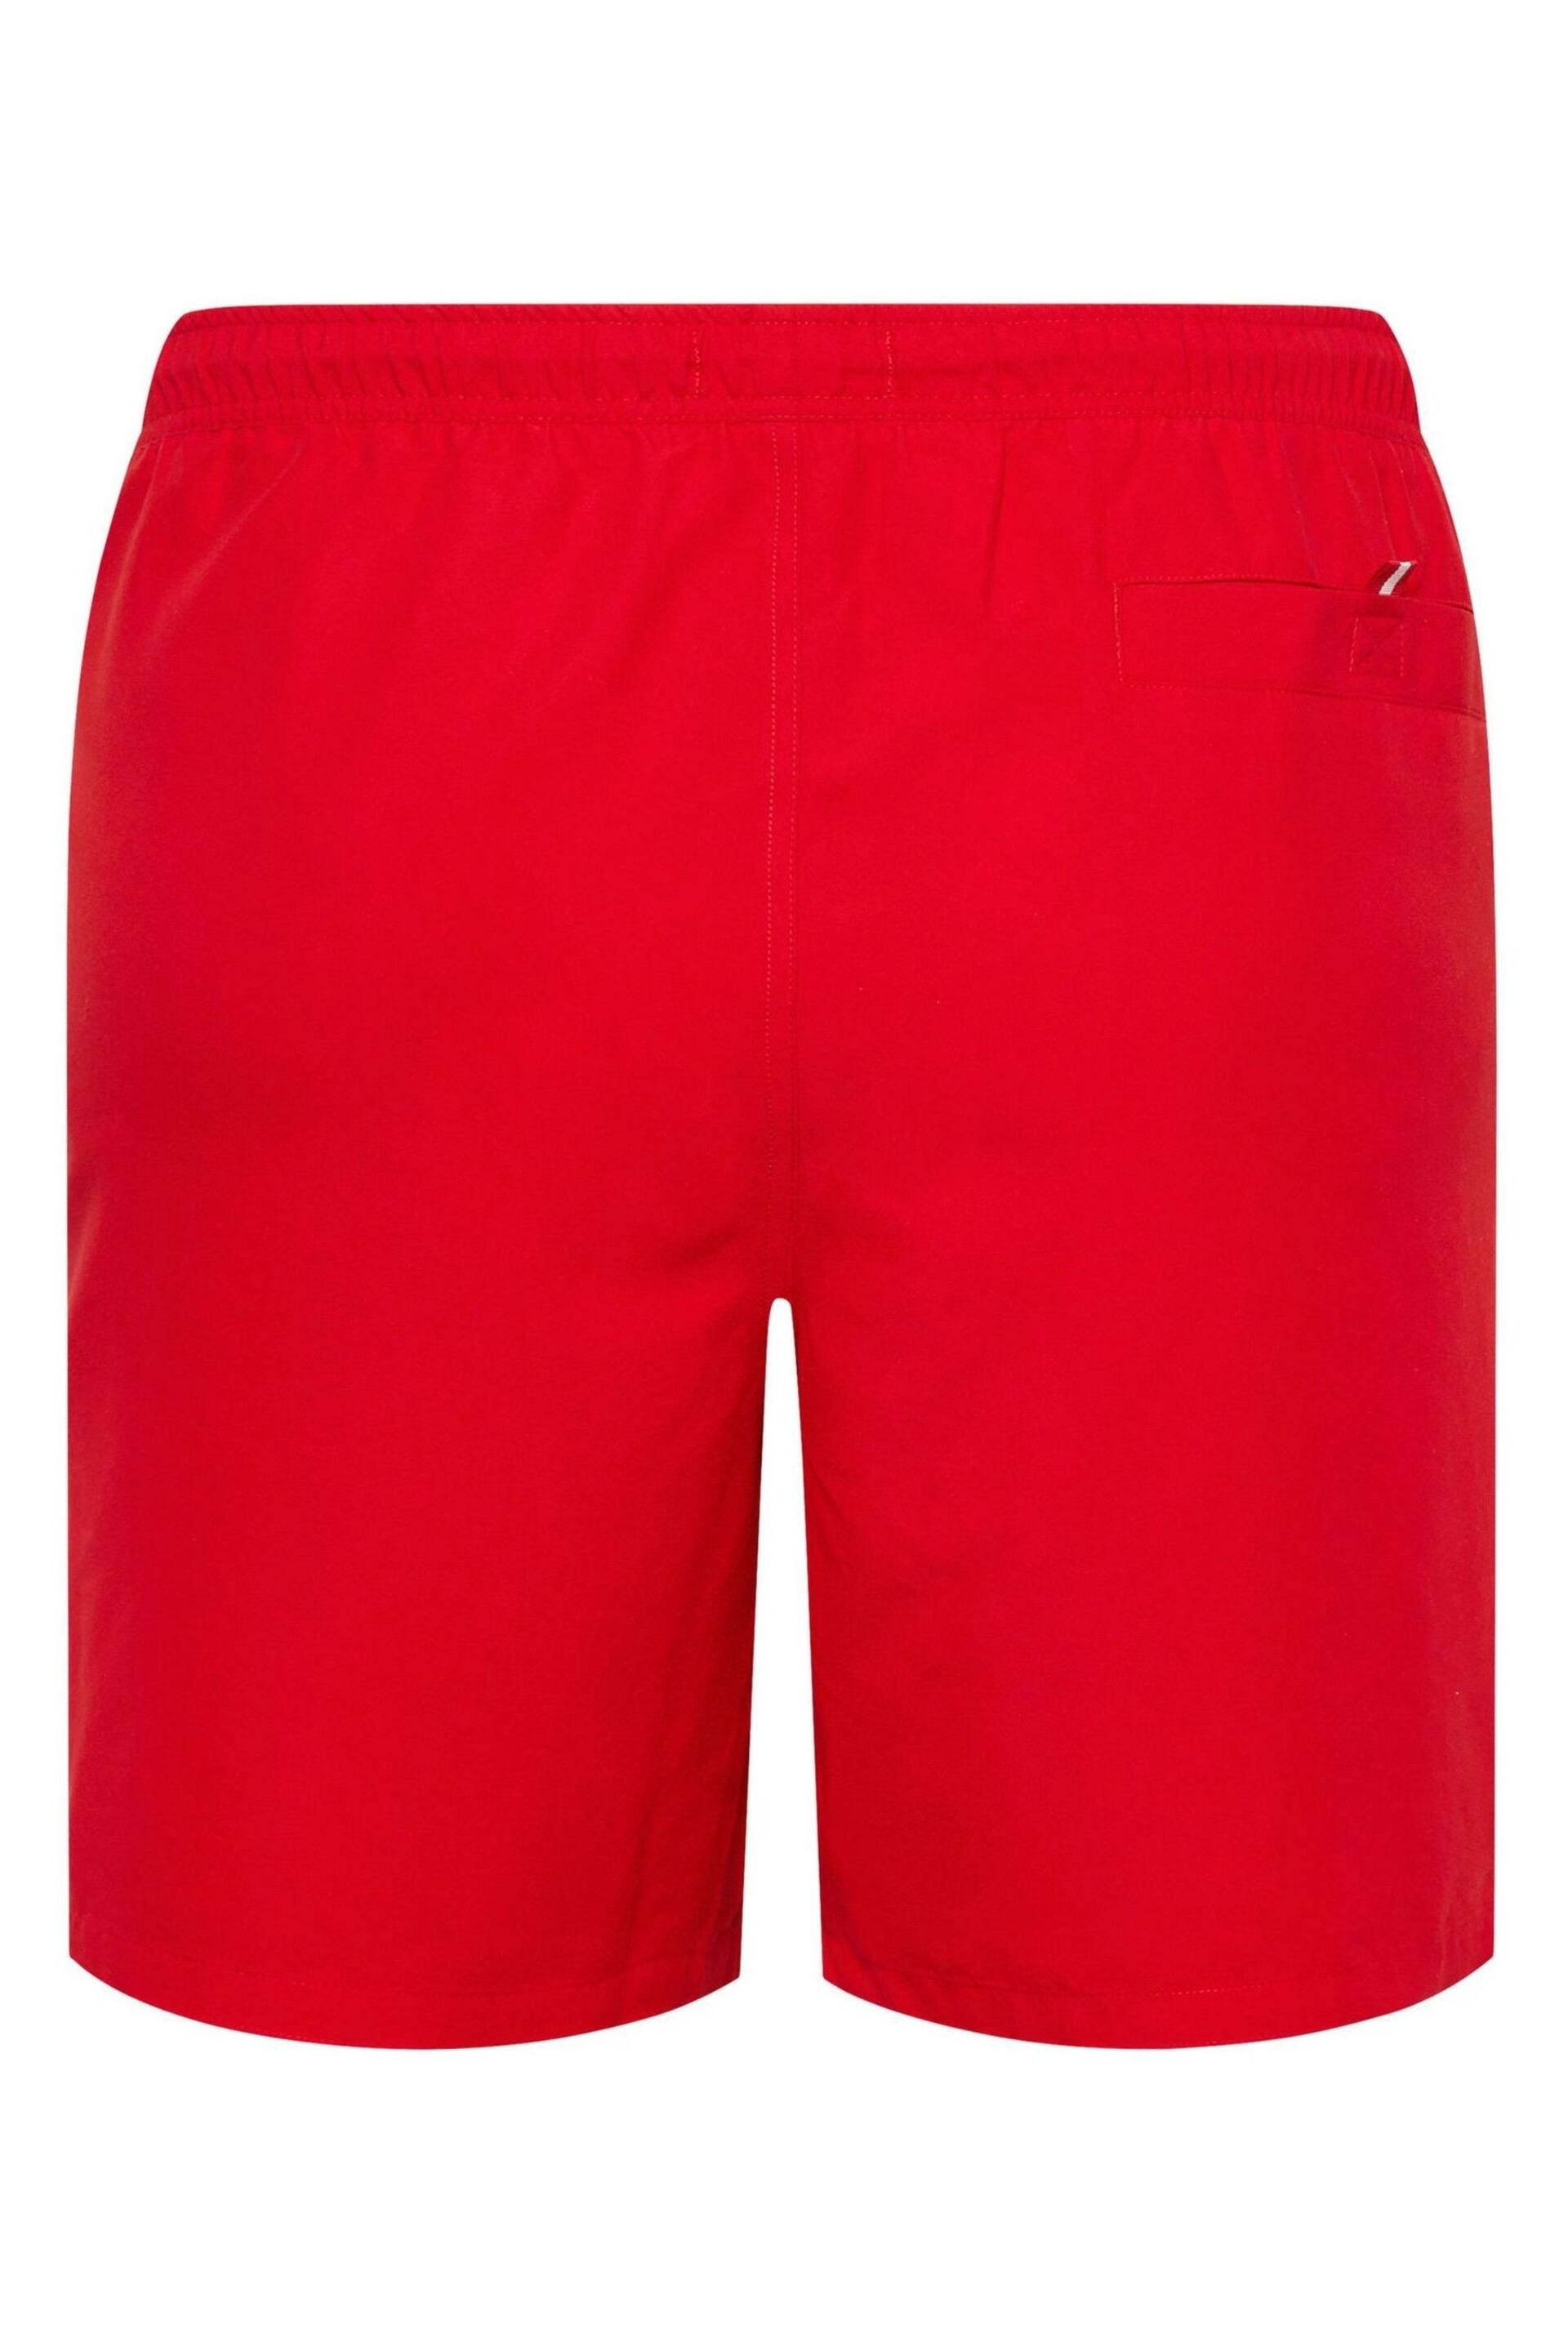 BadRhino Big & Tall Red Plain Swim Shorts - Image 4 of 4